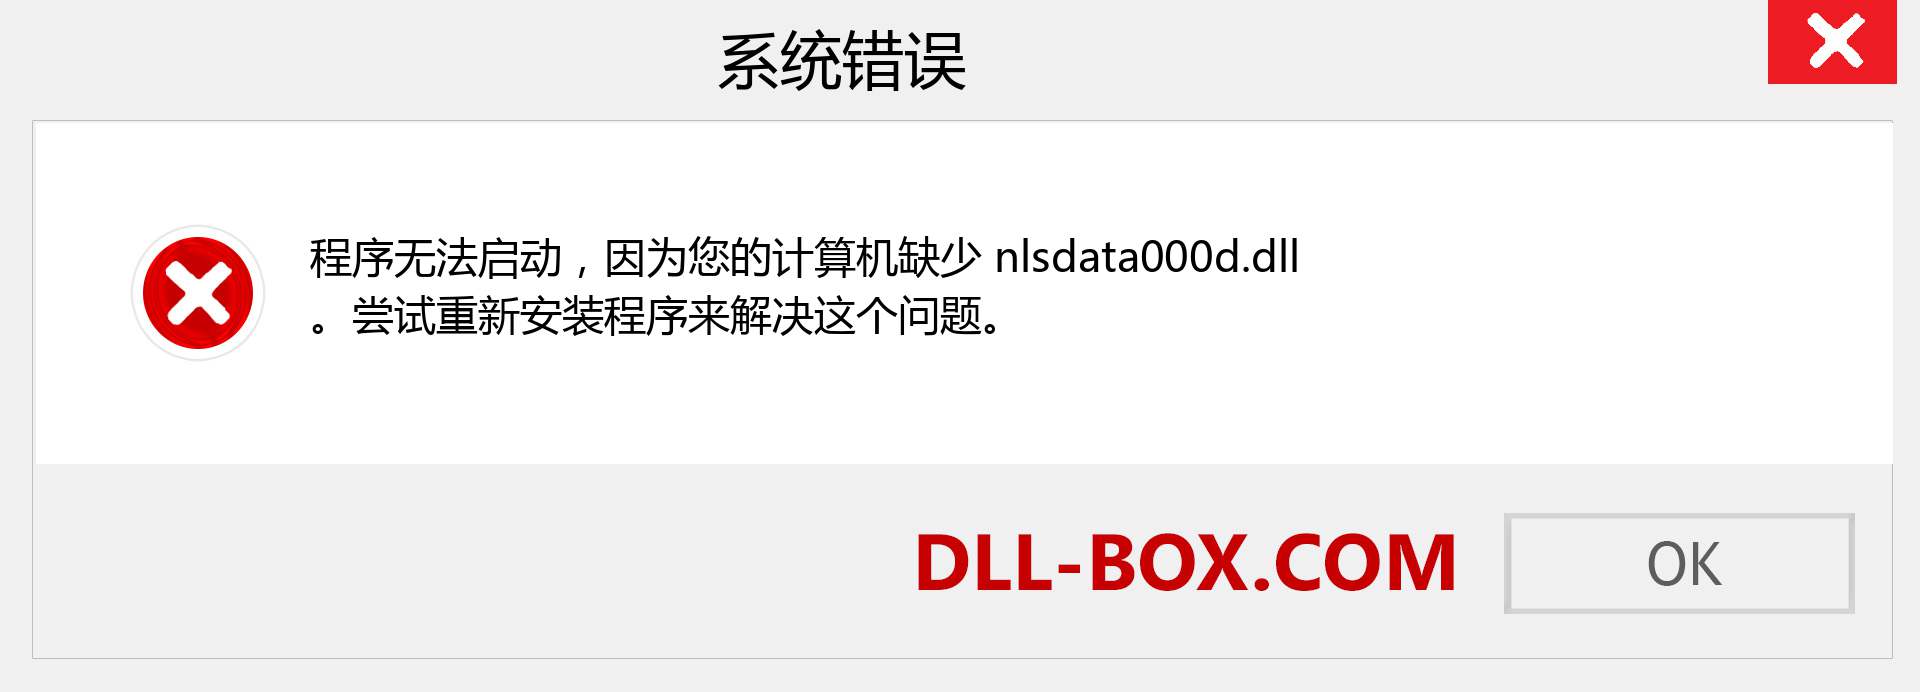 nlsdata000d.dll 文件丢失？。 适用于 Windows 7、8、10 的下载 - 修复 Windows、照片、图像上的 nlsdata000d dll 丢失错误